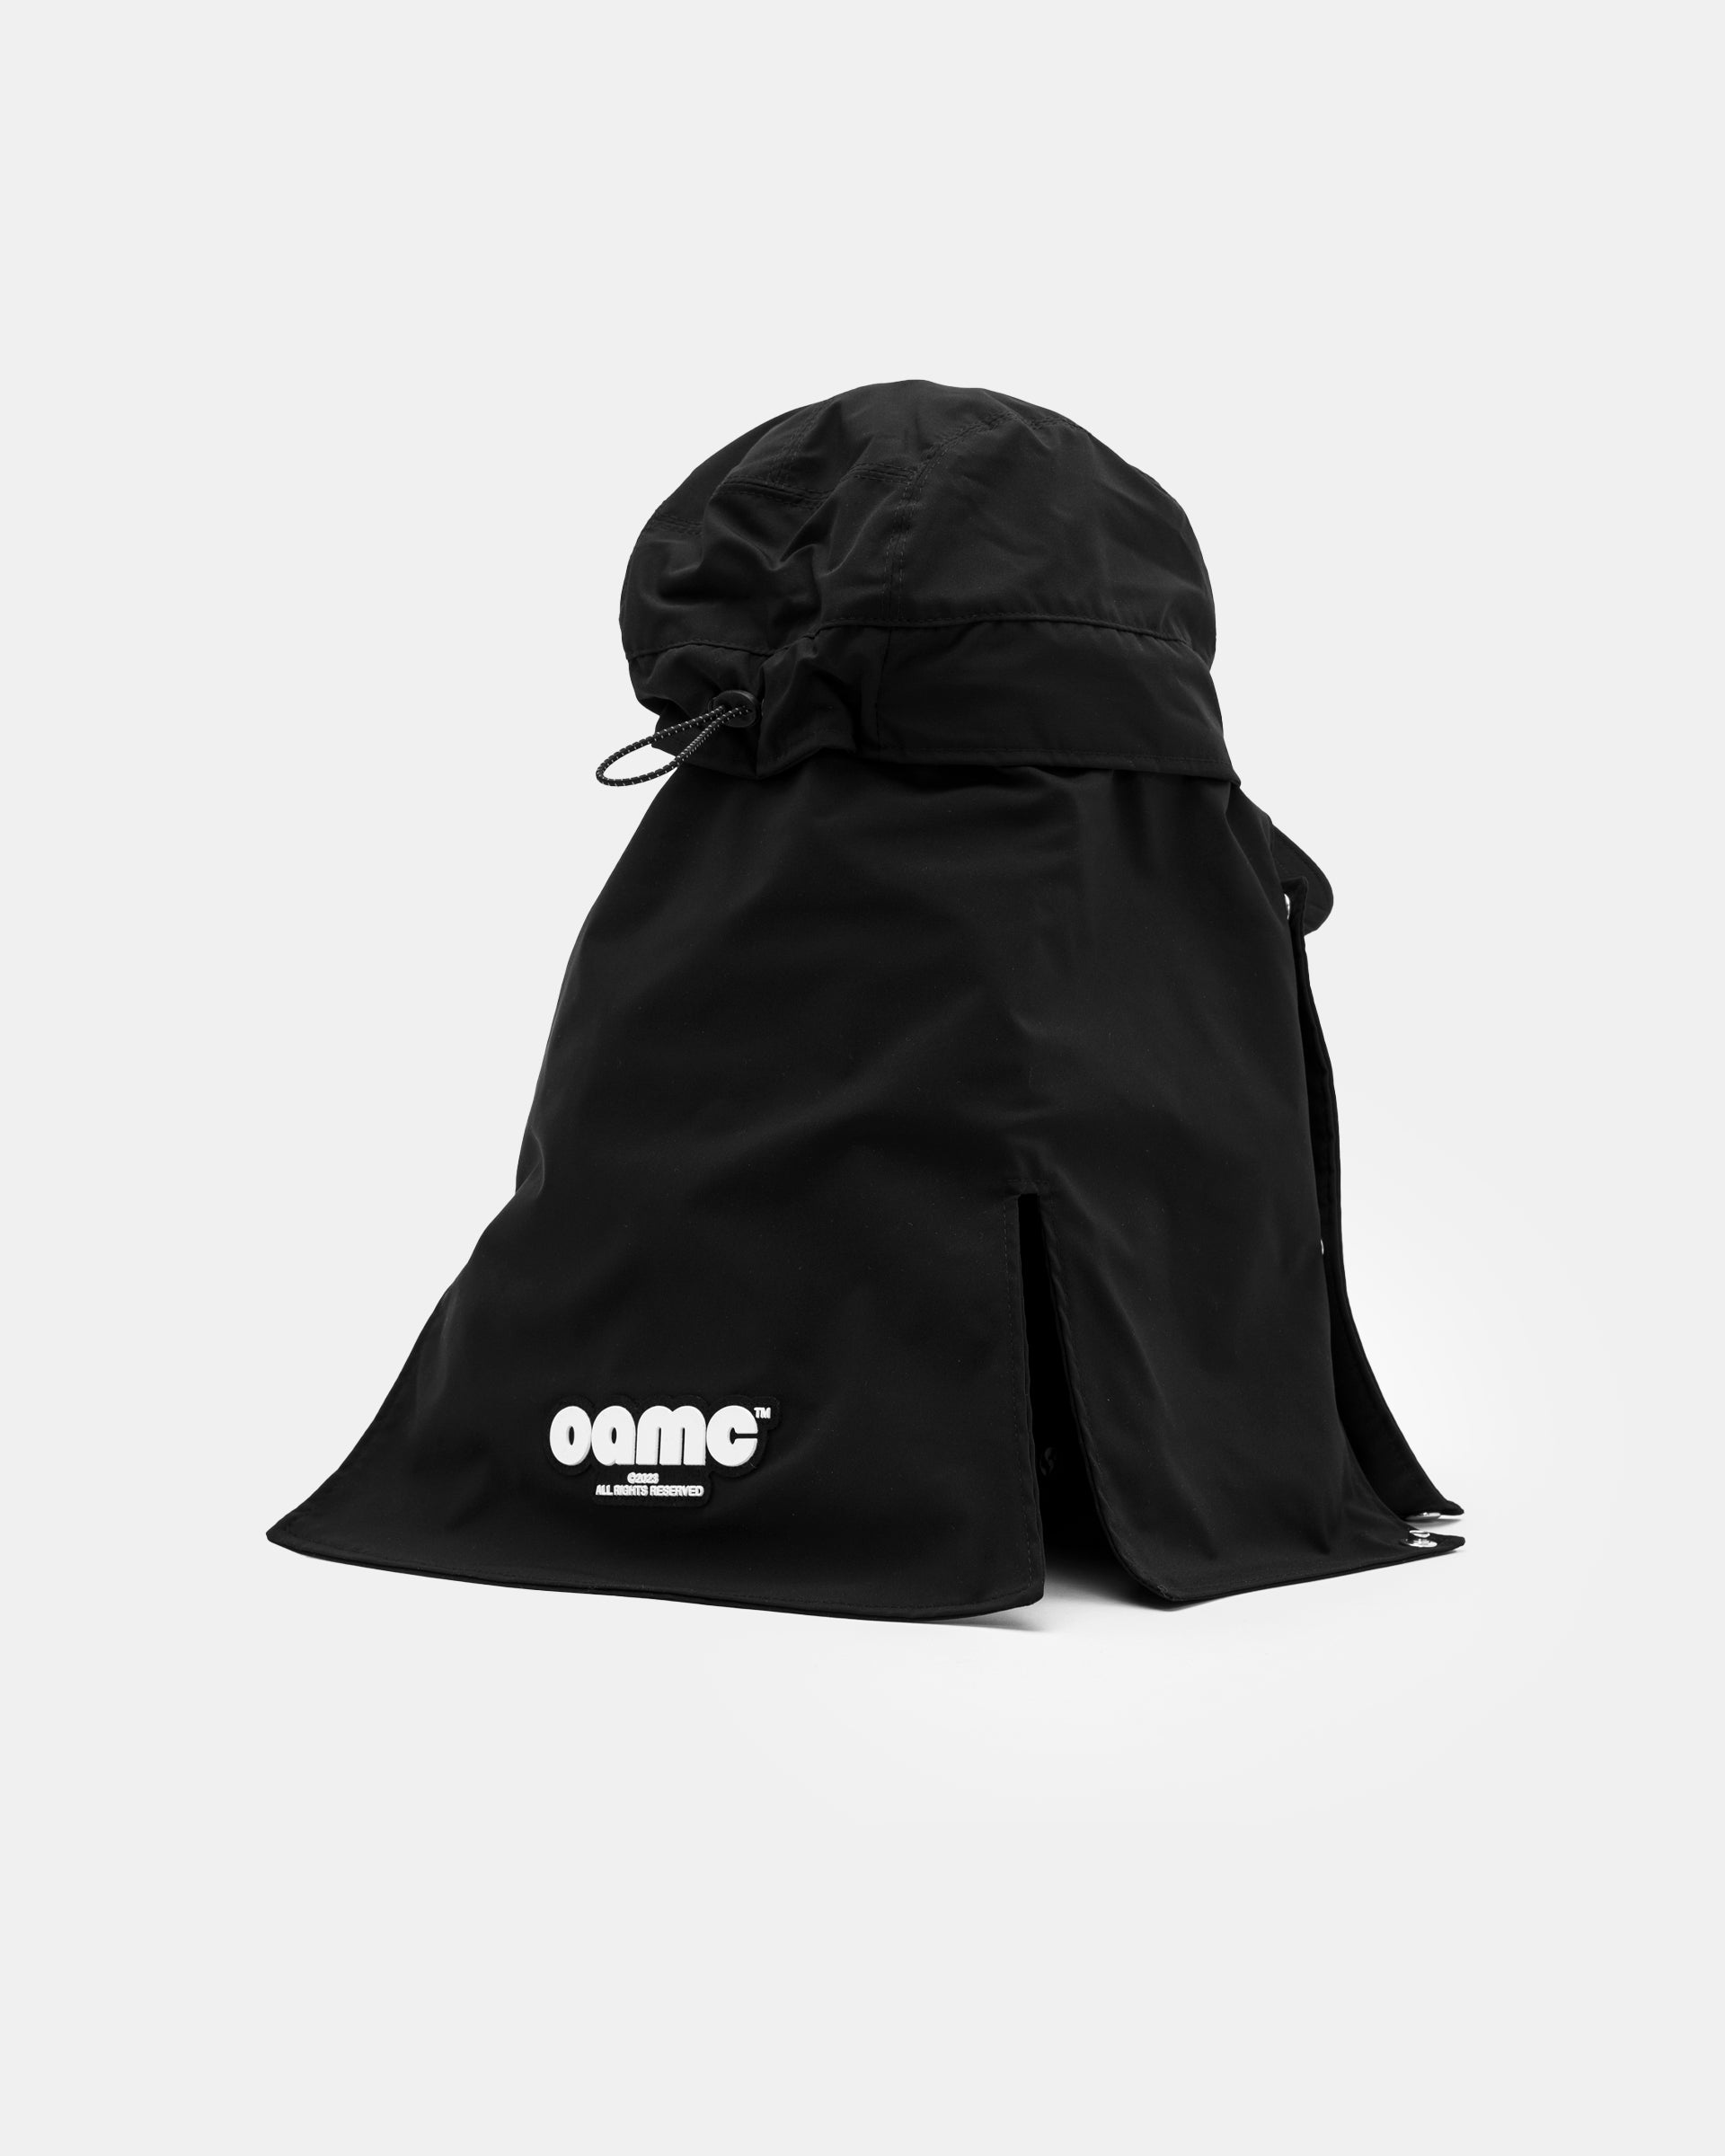 Veiled Cap in Black